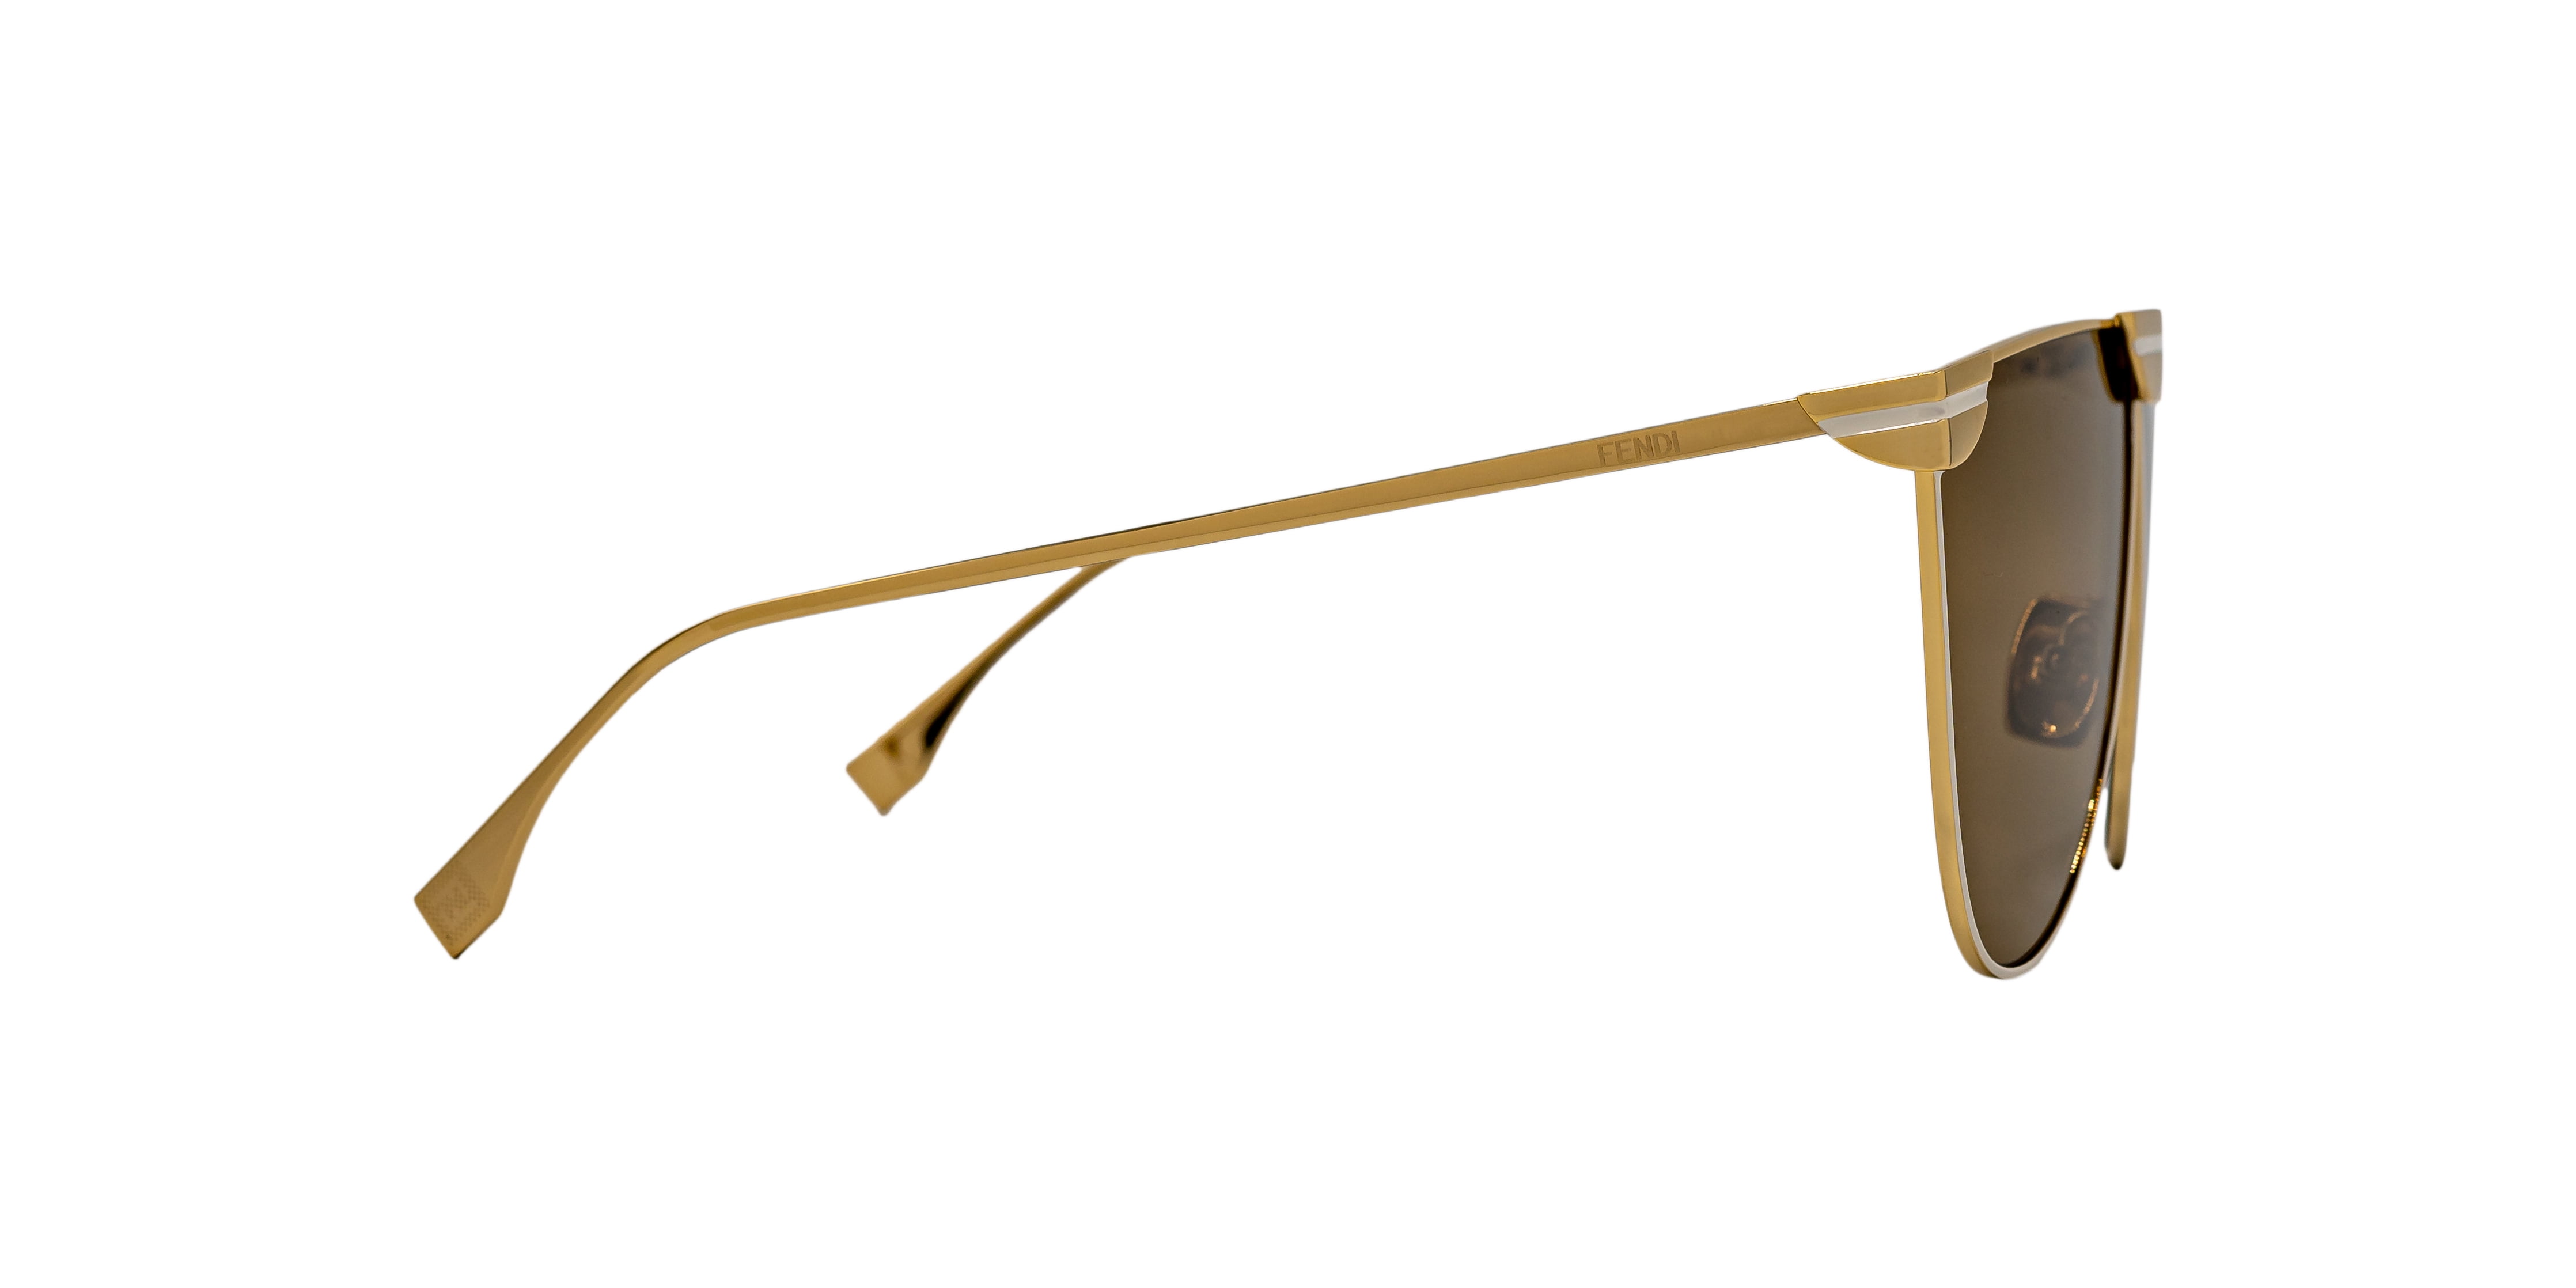 Fendi Brown Shield Ladies Sunglasses FF 0467/S 001Q/70 69 716736412986 -  Sunglasses - Jomashop